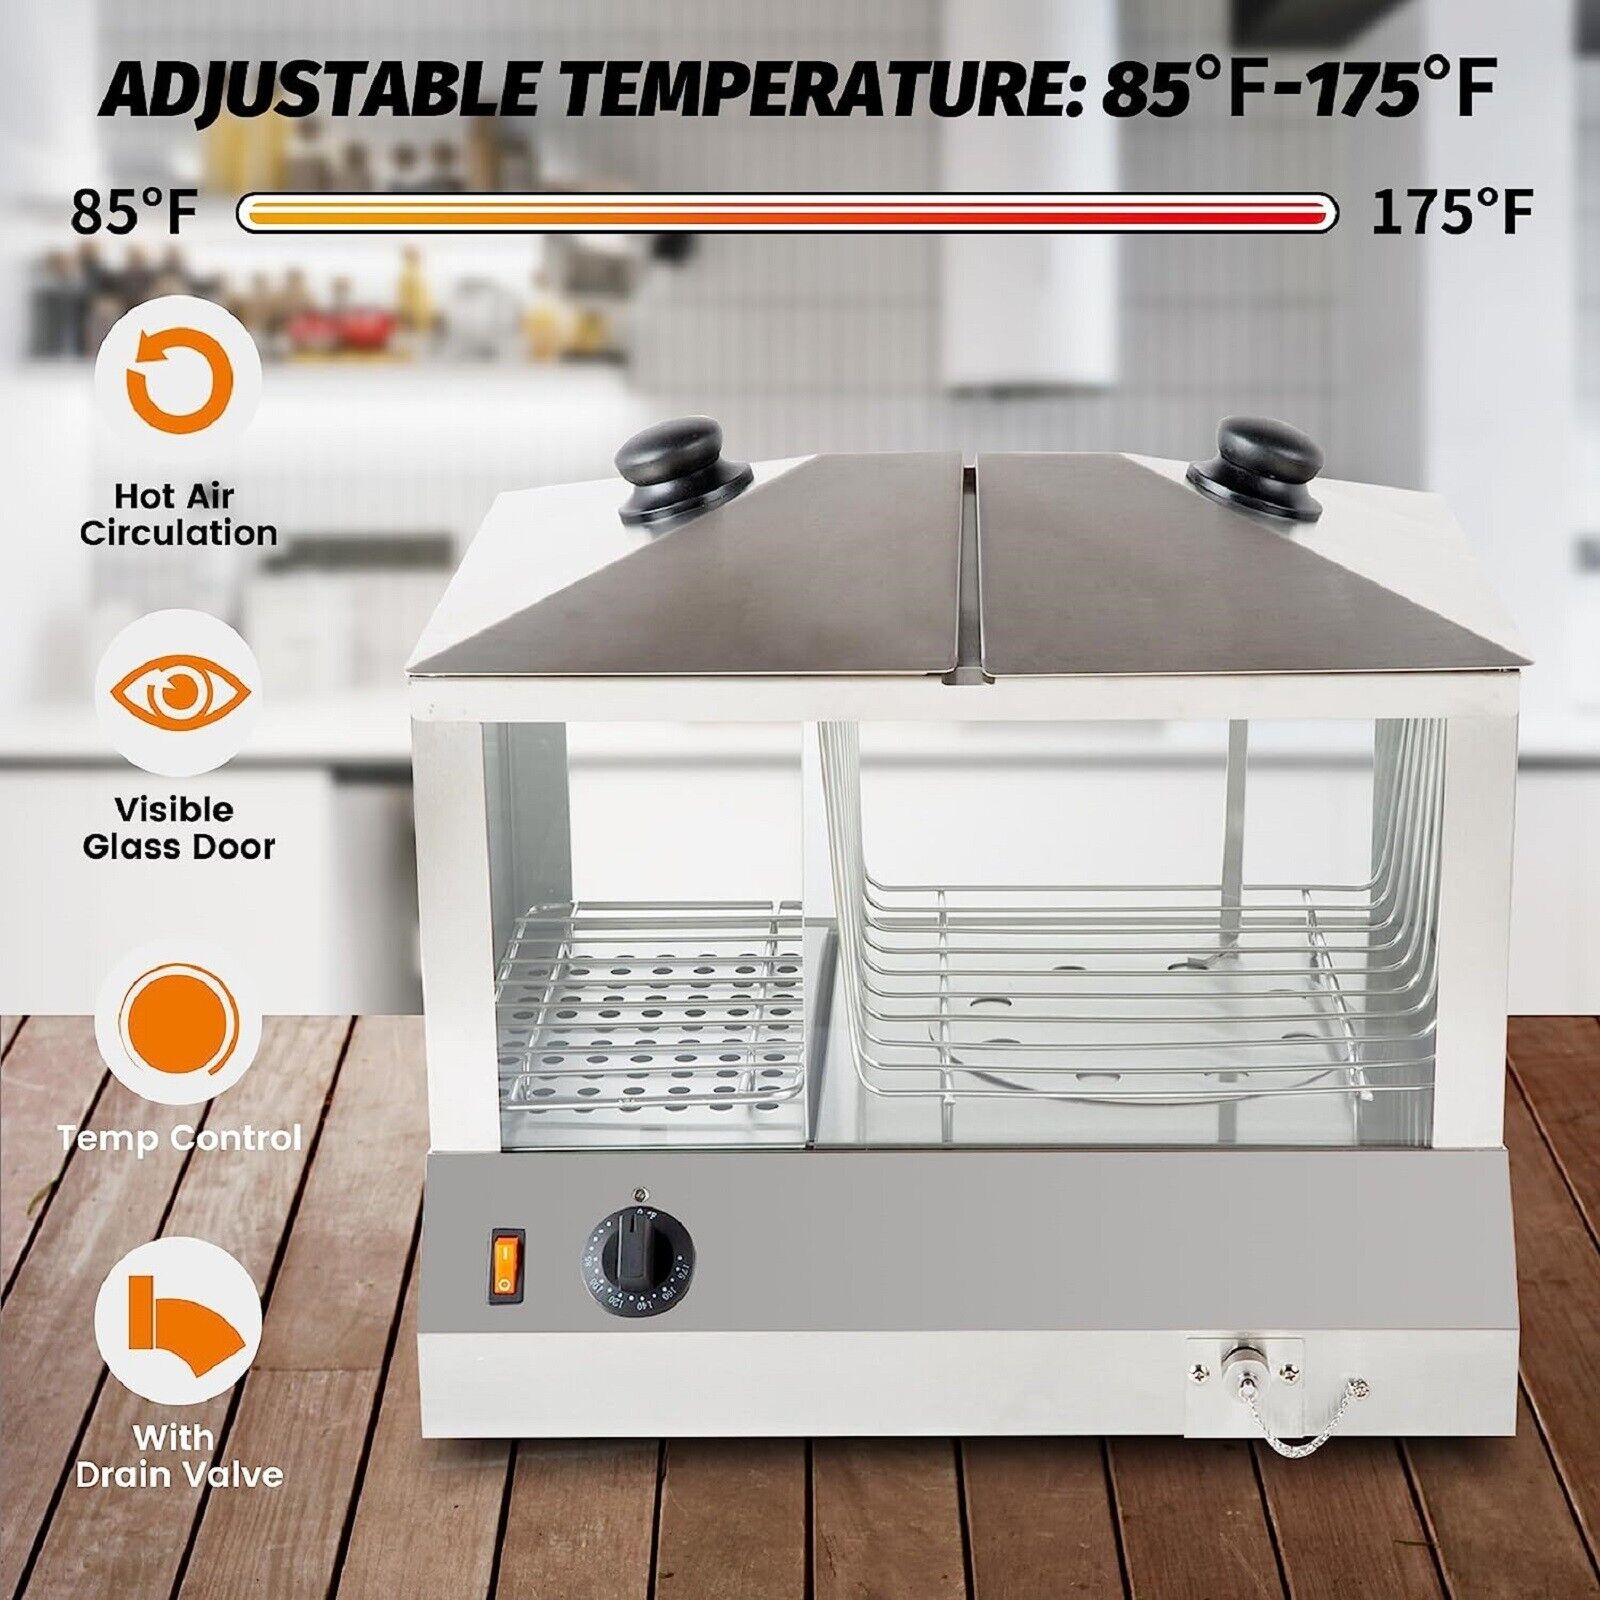 Hakka Commercial 200 Hot Dog Steamer 48 Bun Warmer Countertop Cooker Machine